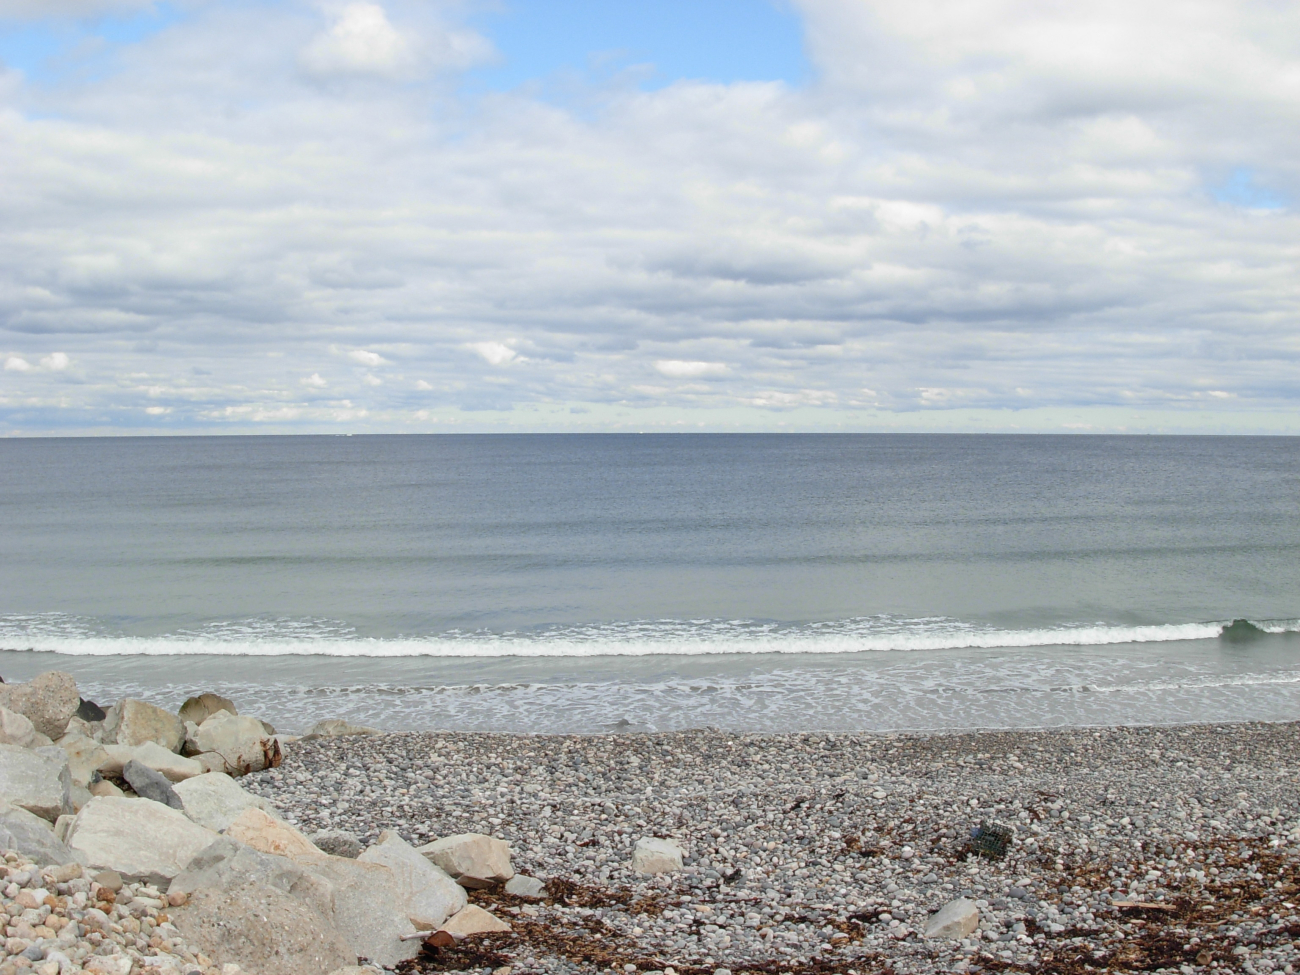 A cobble beach along the New England coast